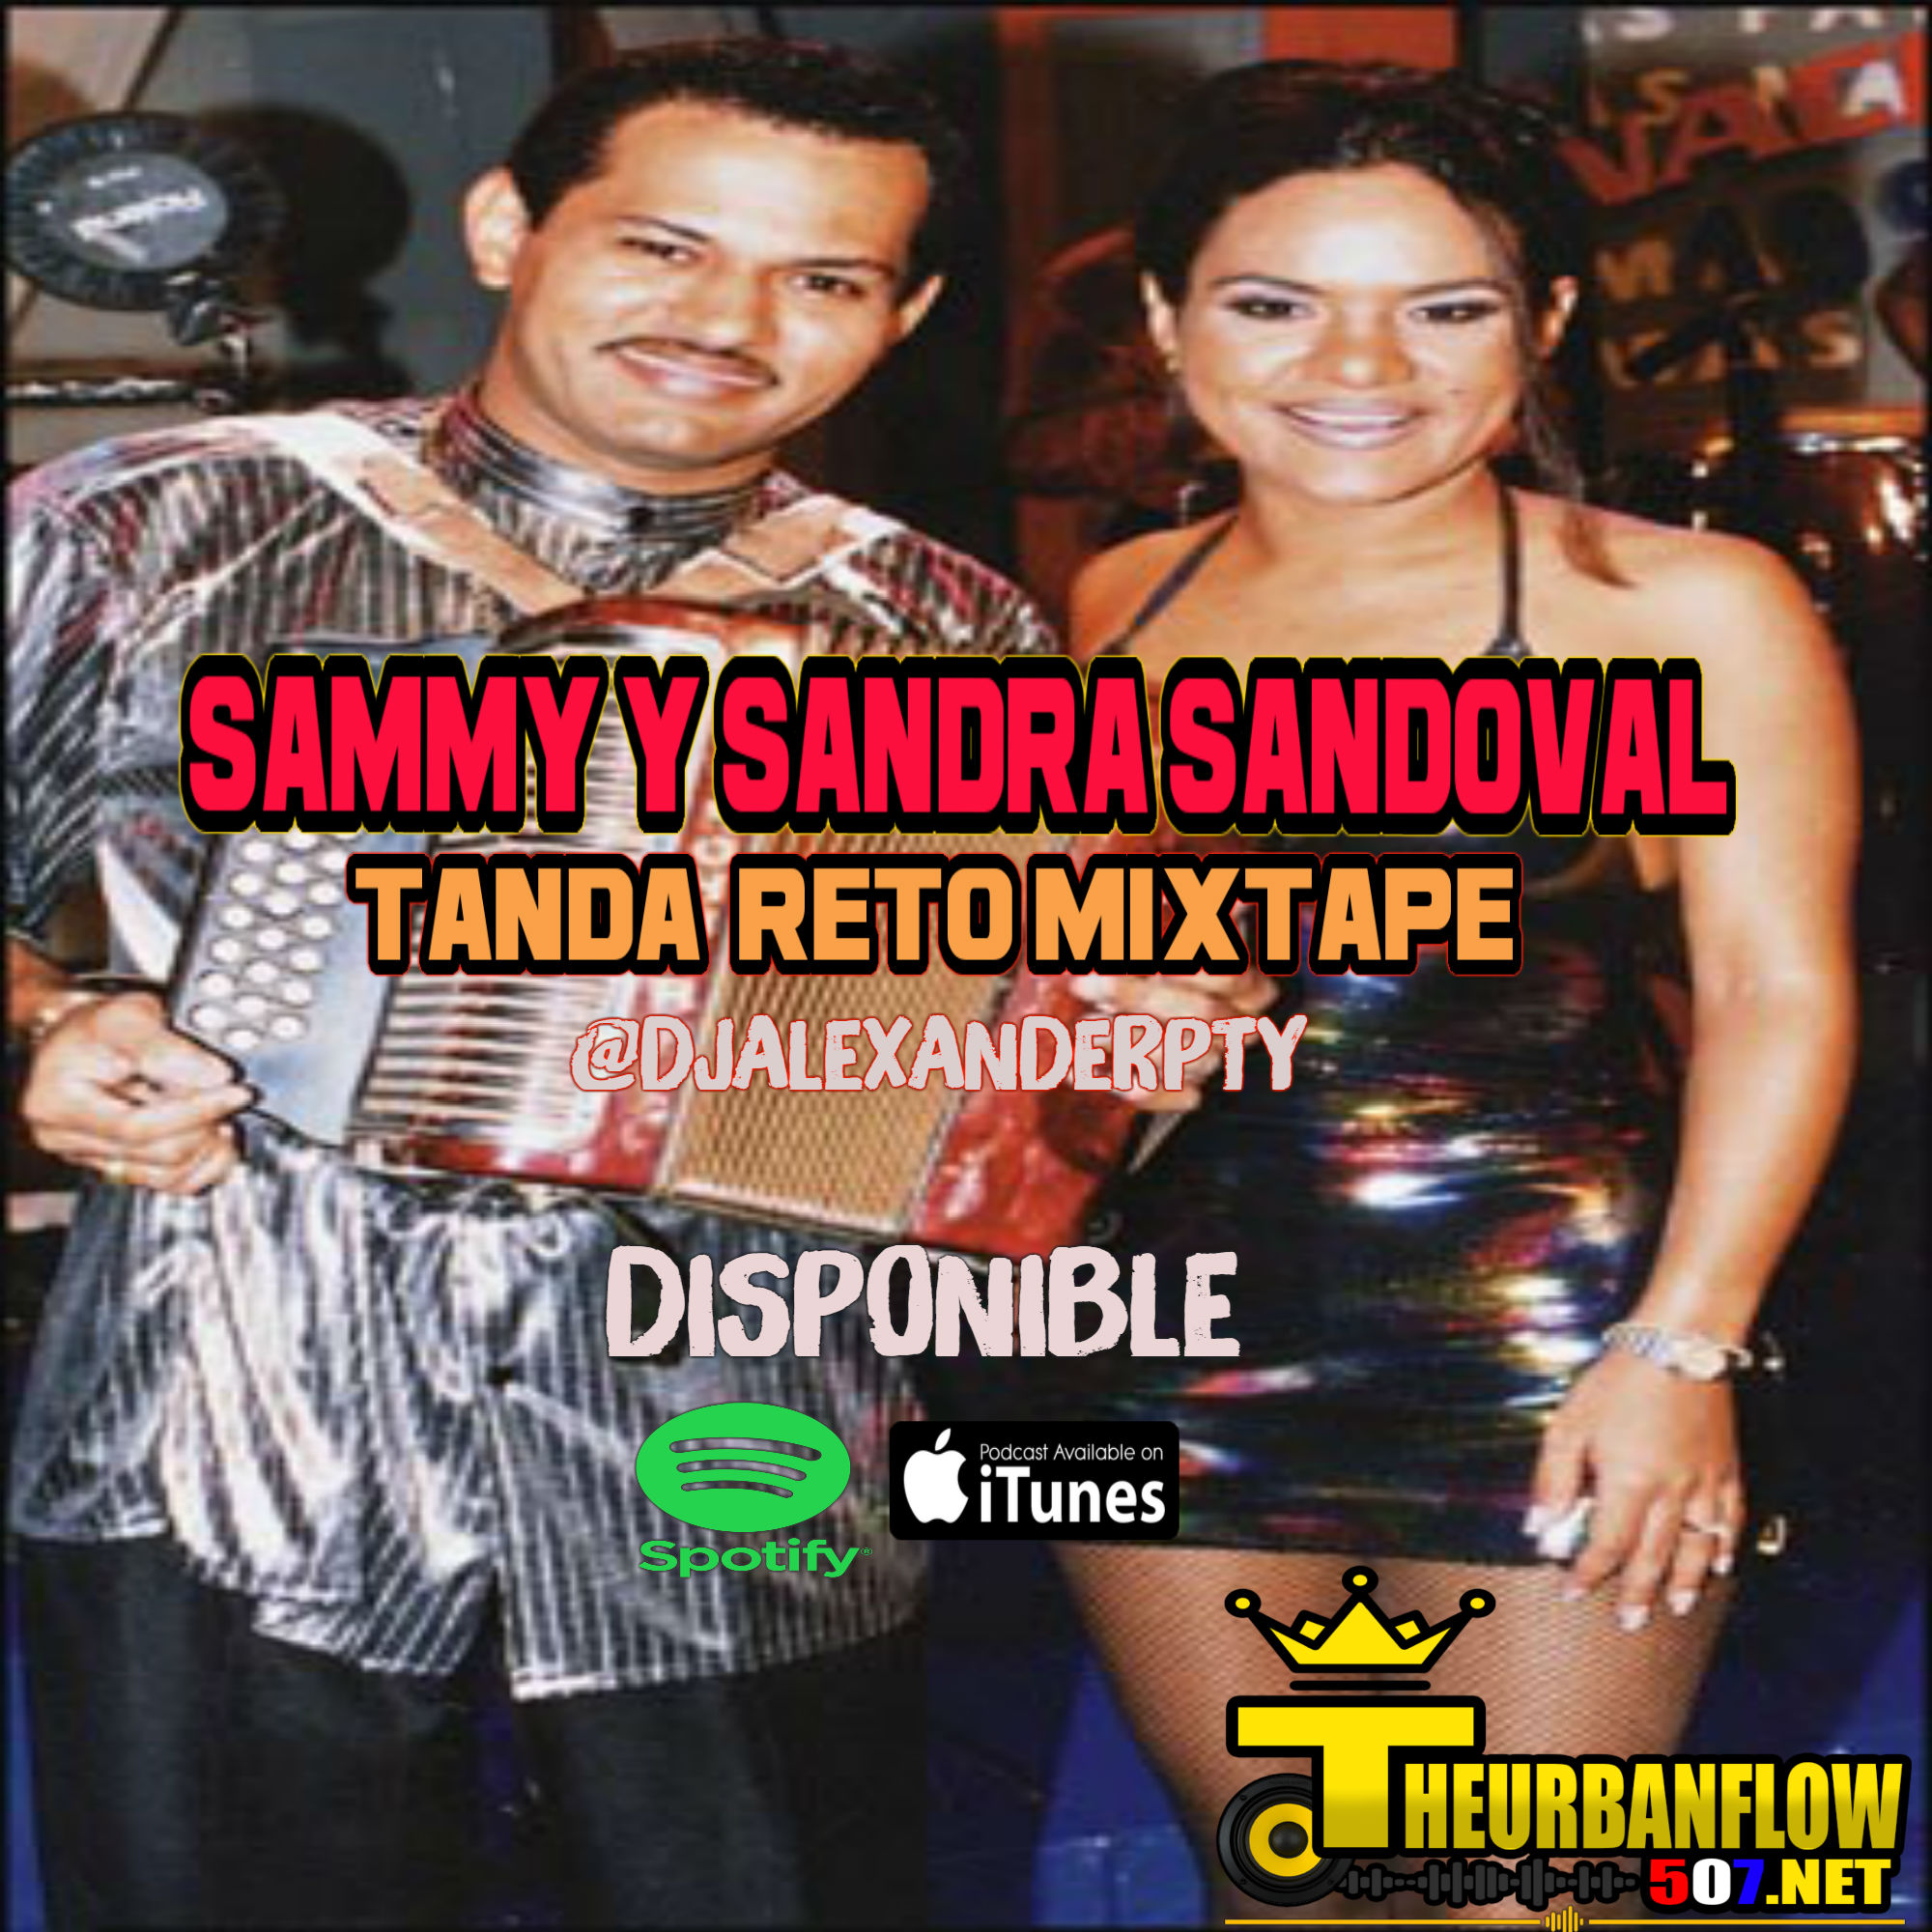 SAMMY Y SANDRA SANDOVAL TANDA RETRO MIXTAPE - DJALEXANDERPTY